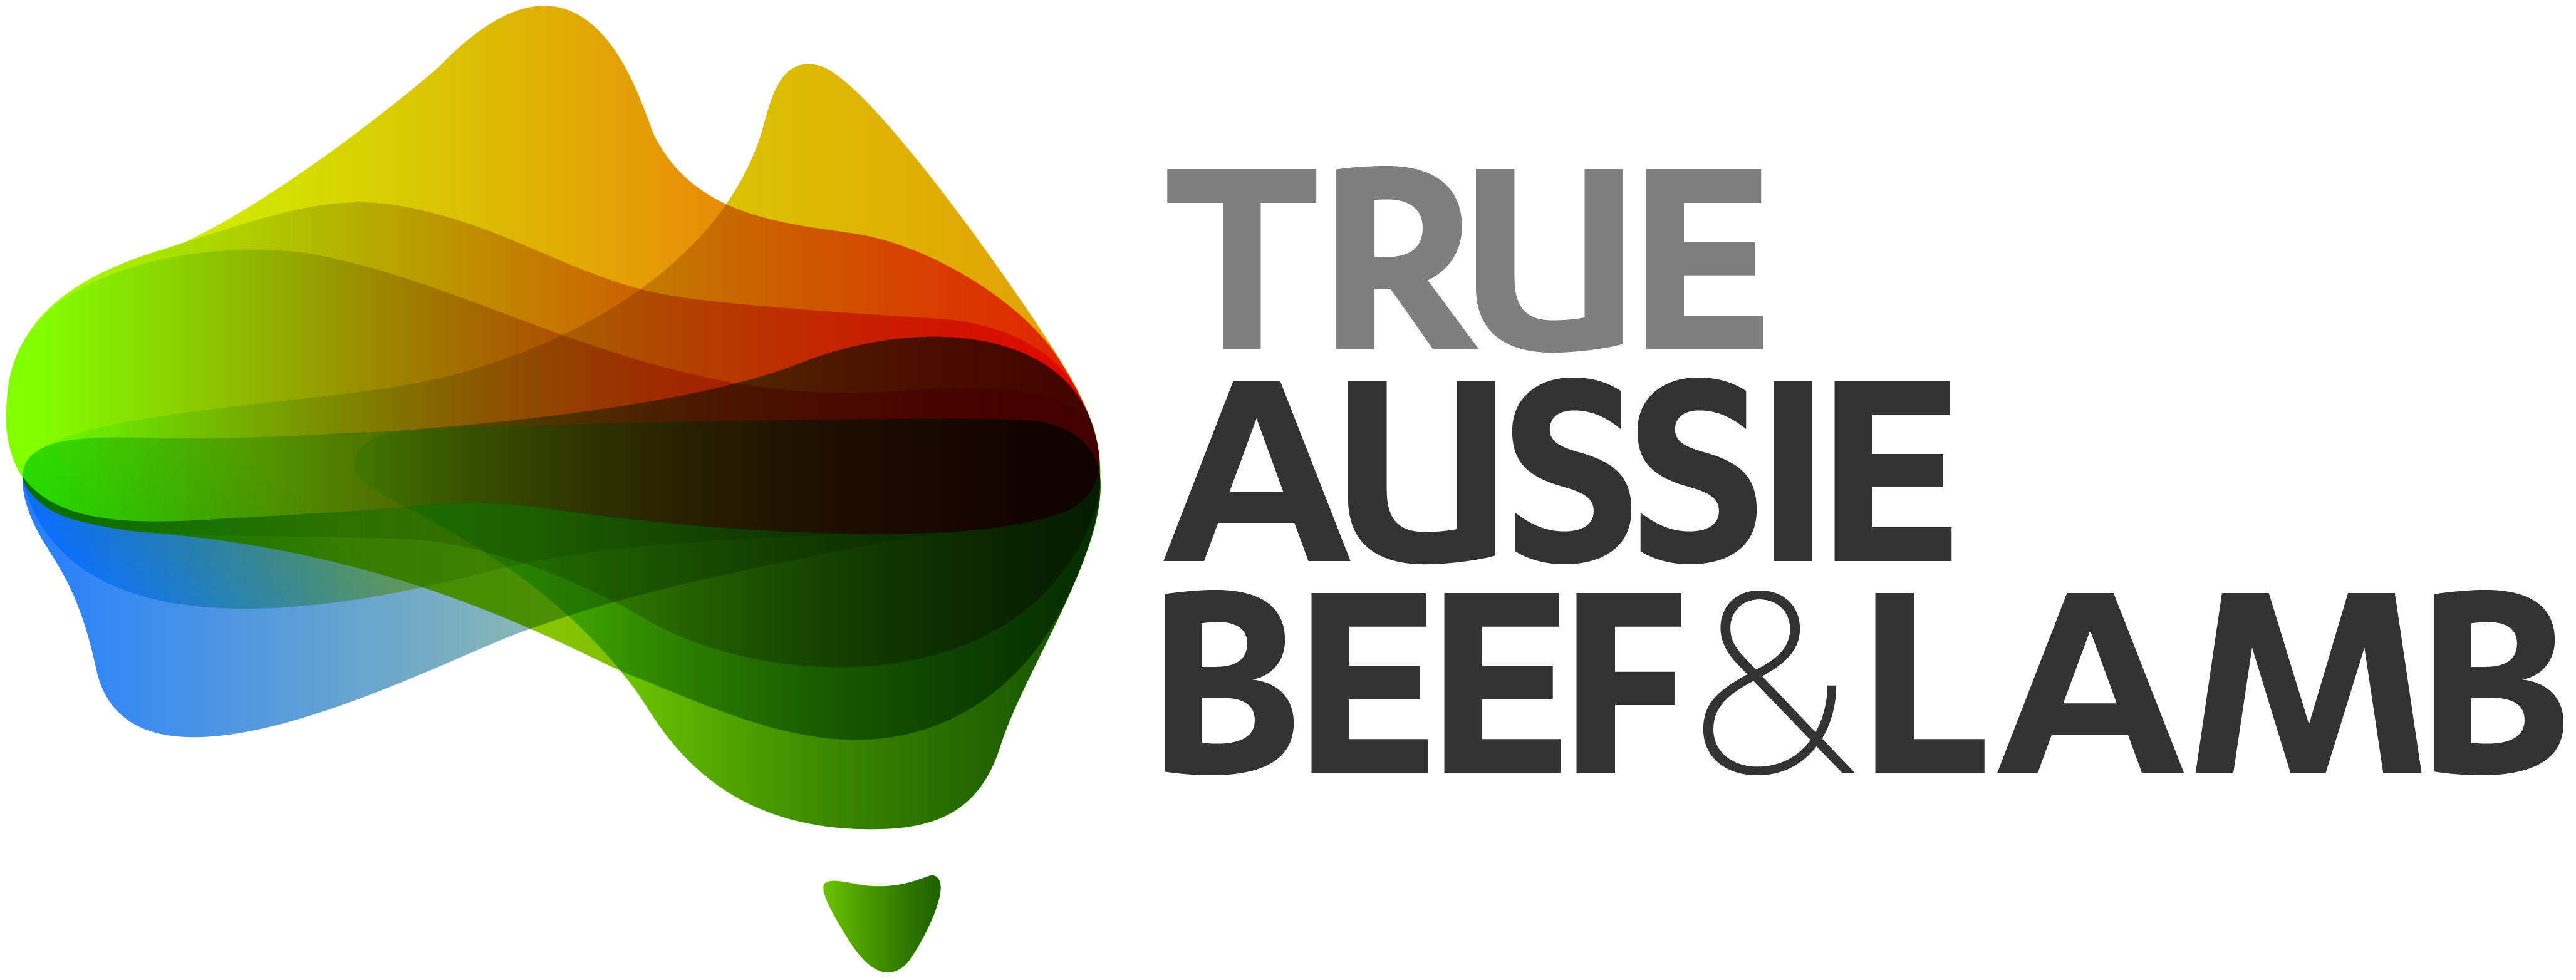 Australian Beef Logo - Meat & Livestock Australia. International Corporate Chefs Association